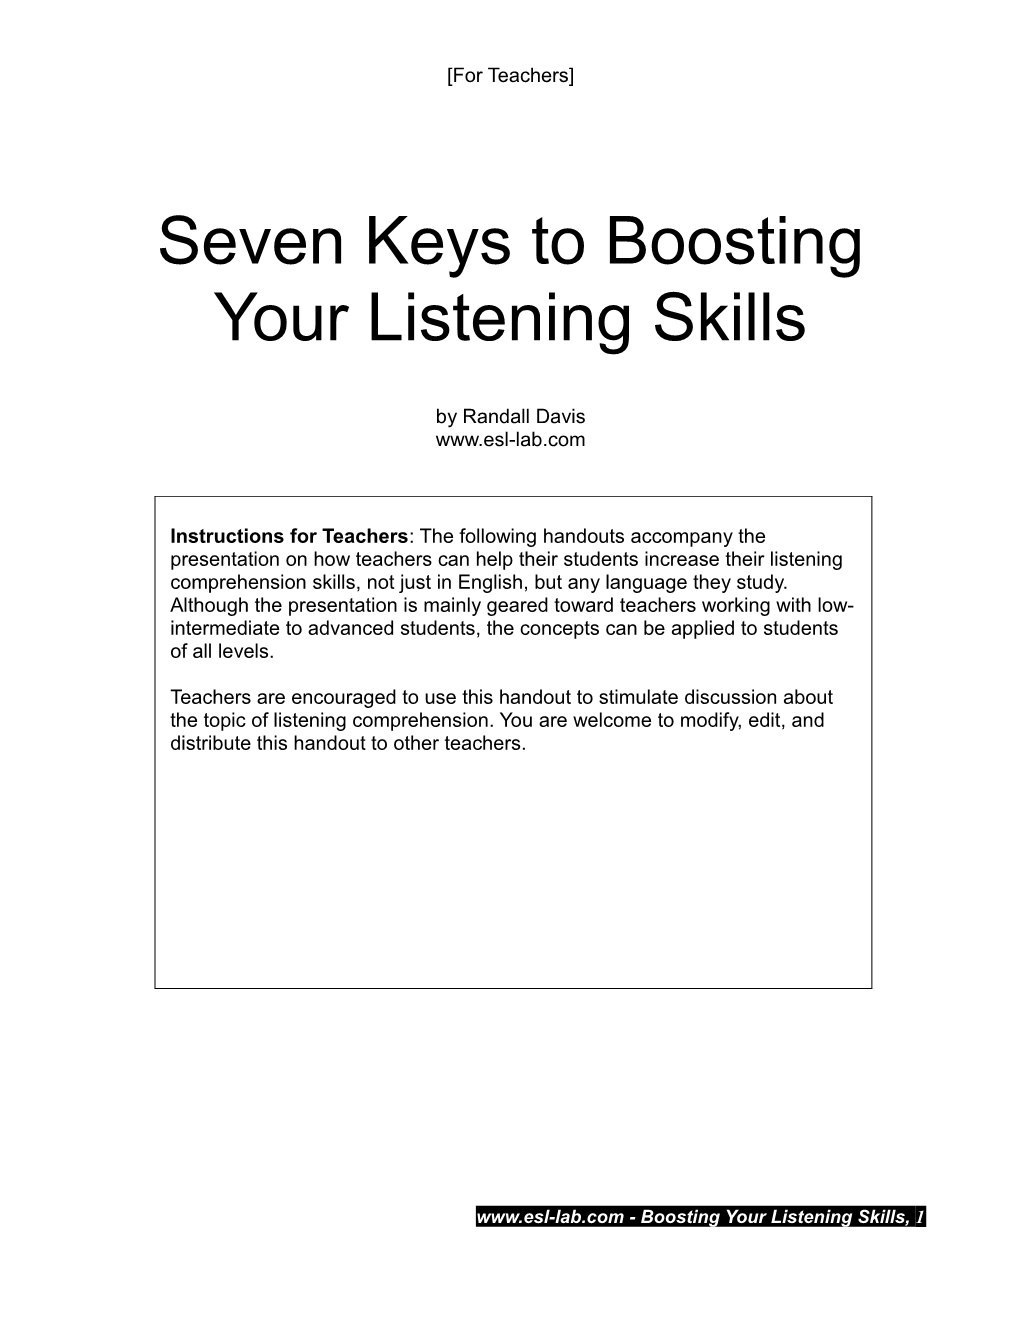 Seven Keys to Boosting Your Listening Skills